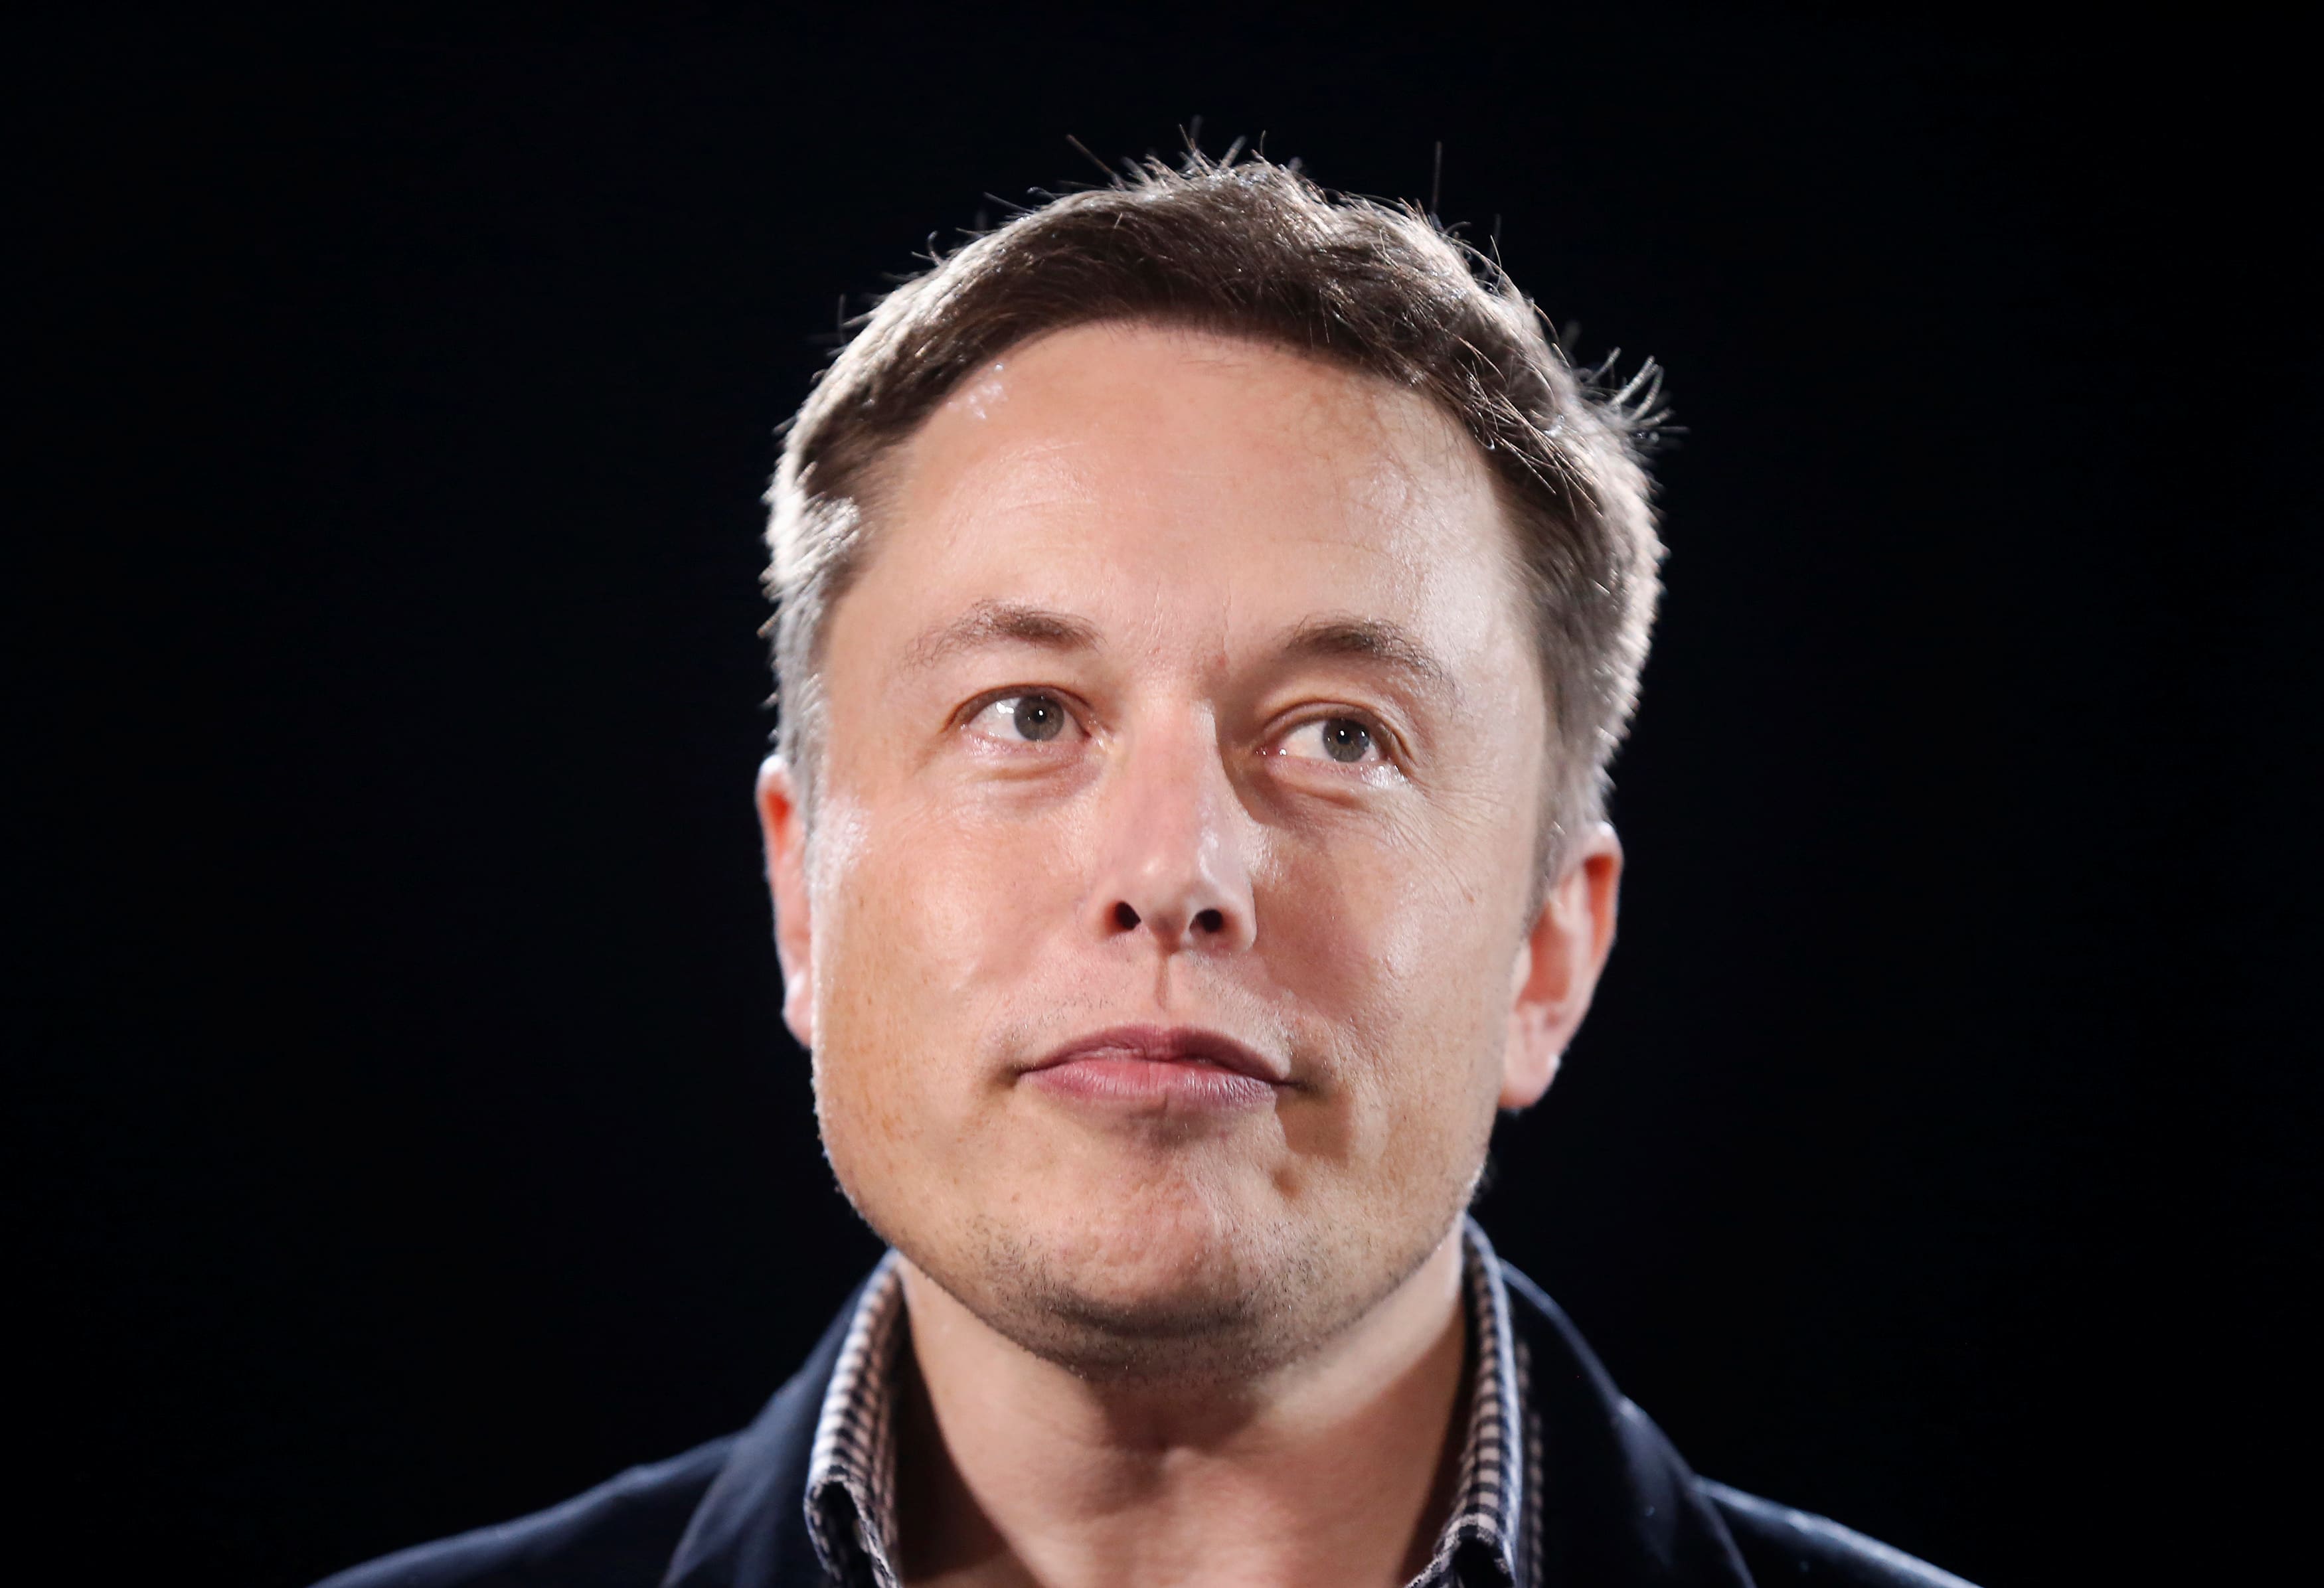 Dogecoin tumbles after Elon Musk calls it a ‘hustle’ on ‘SNL’ show